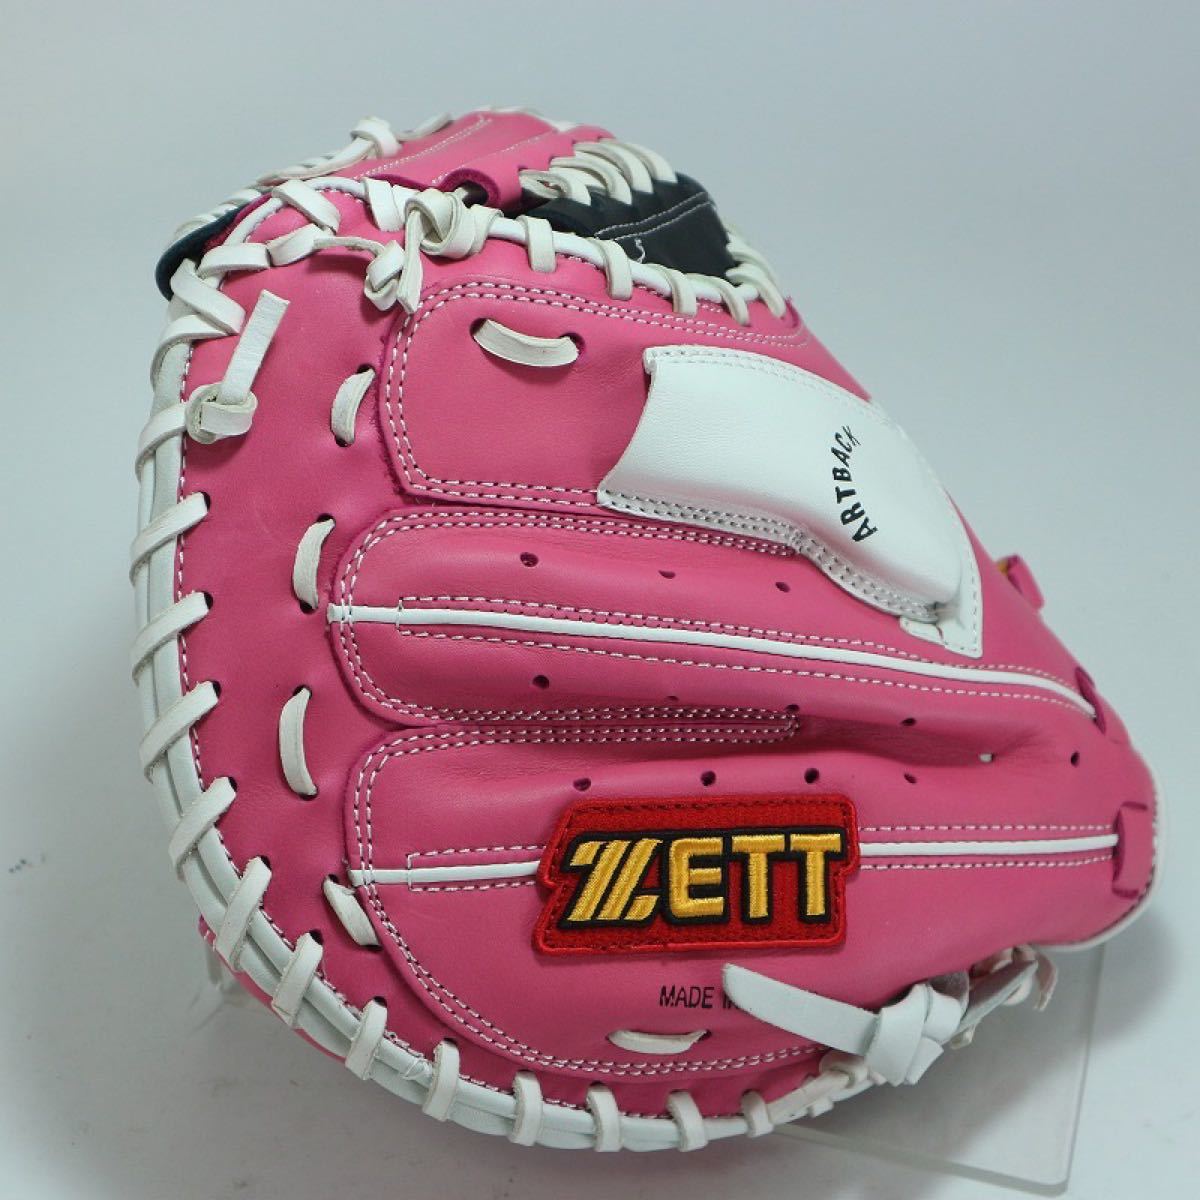 ZETT ゼット キャッチャー用 捕手用 硬式キャッチャーミット 硬式